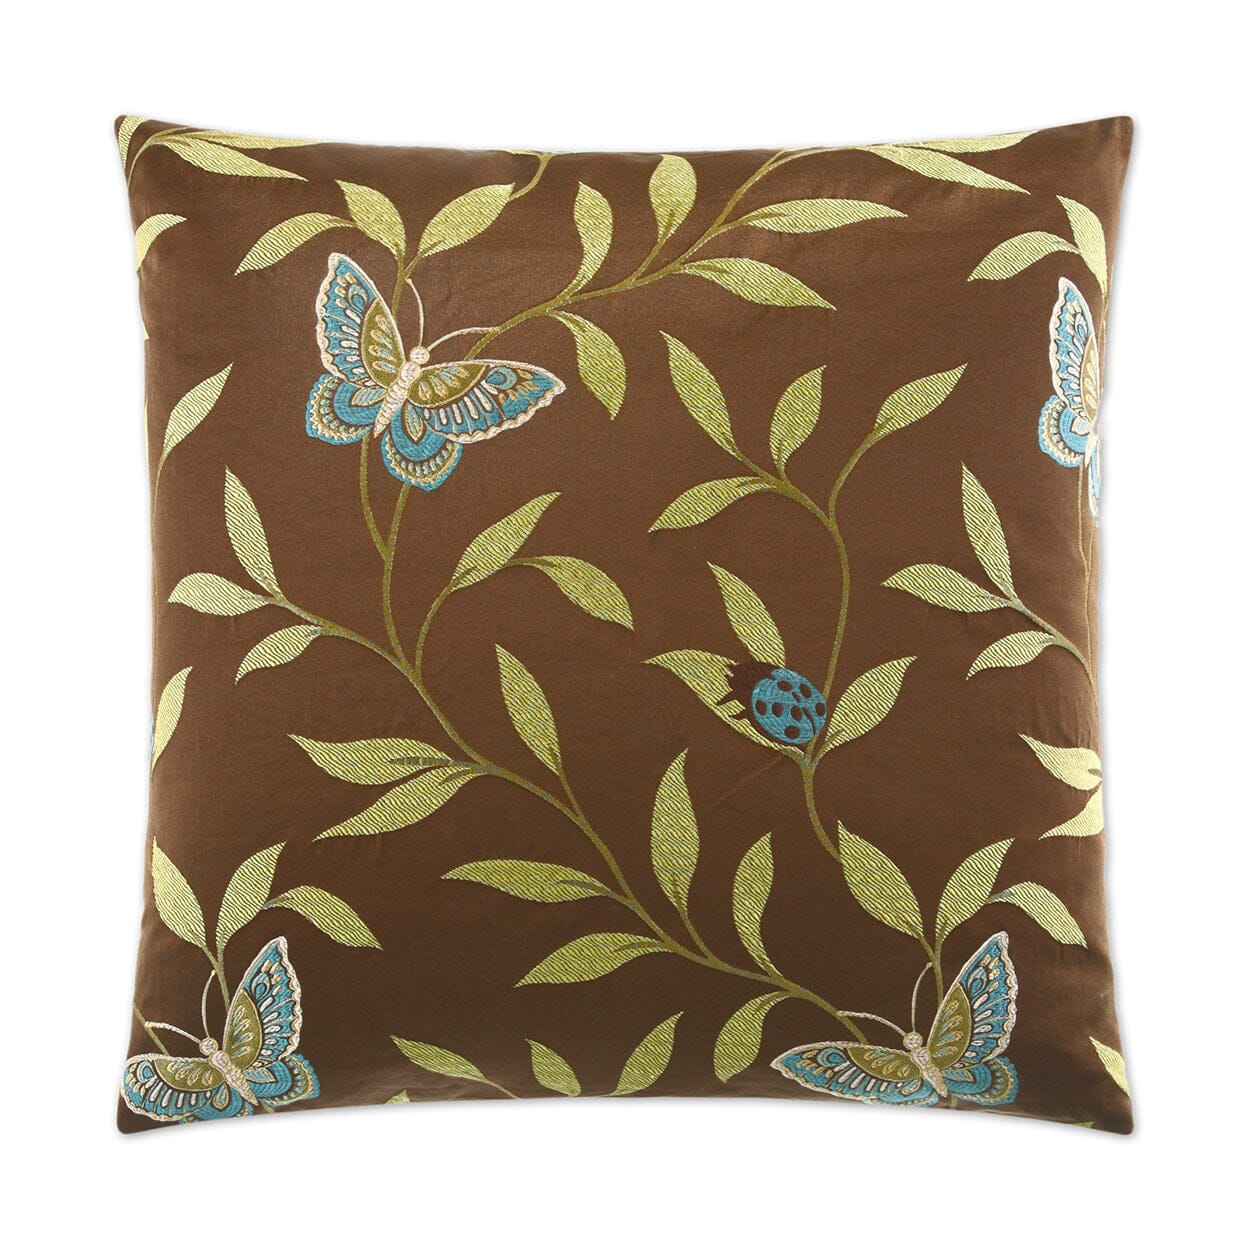 D.V. Kap Papillon Decorative Throw Pillow Pillows D.V Kap Home